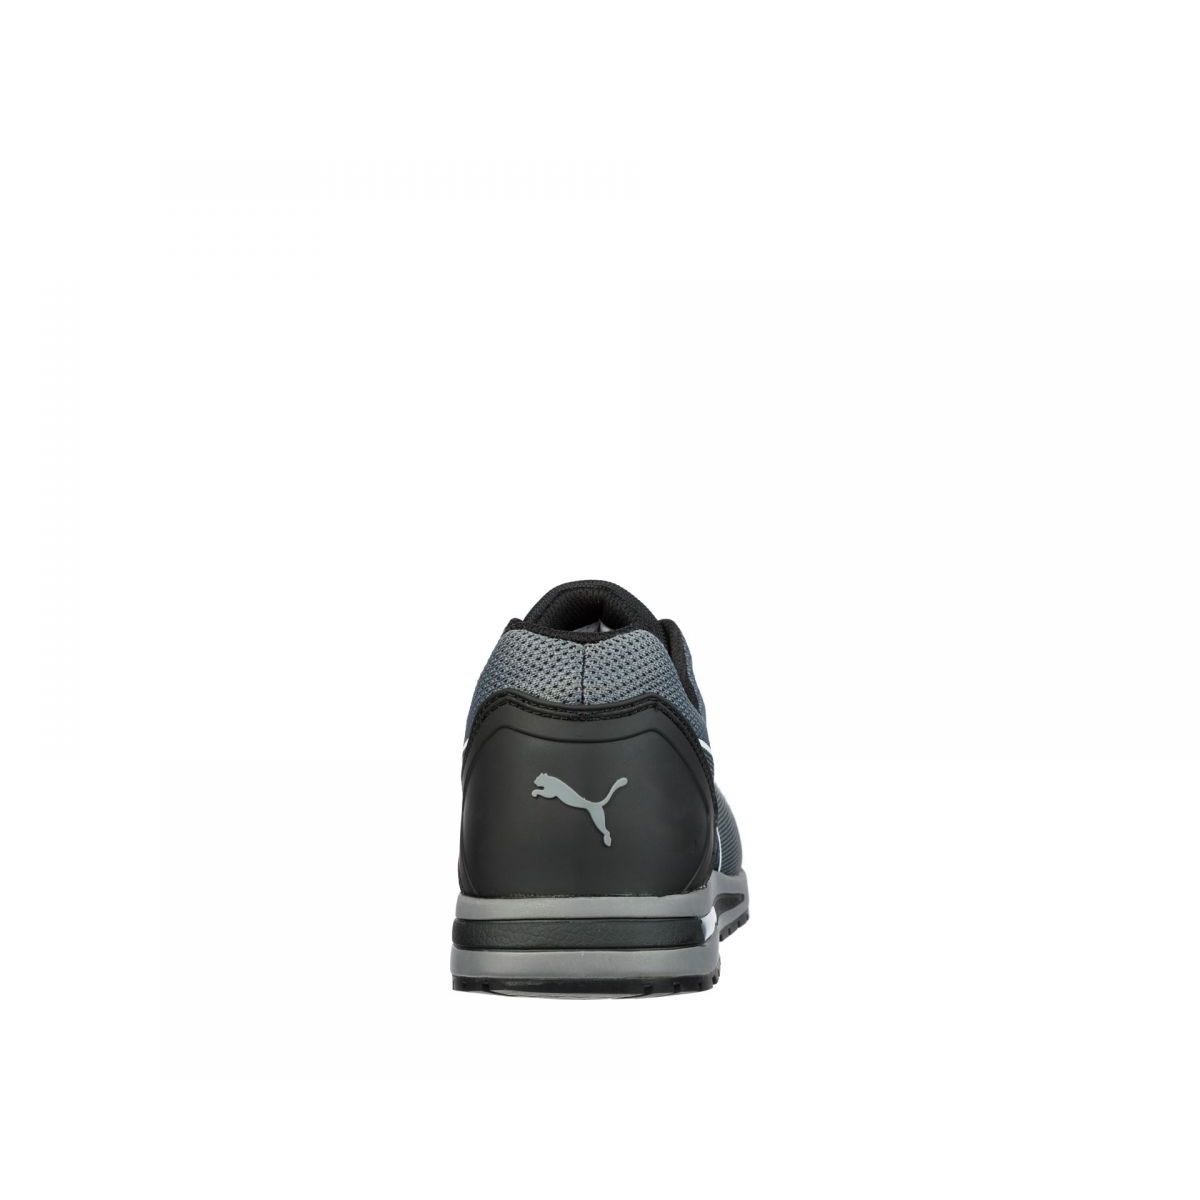 PUMA Safety Men's Elevate Knit Low Composite Toe ESD Work Shoe Black - 643165 ONE SIZE BLACK - BLACK, 7 Wide